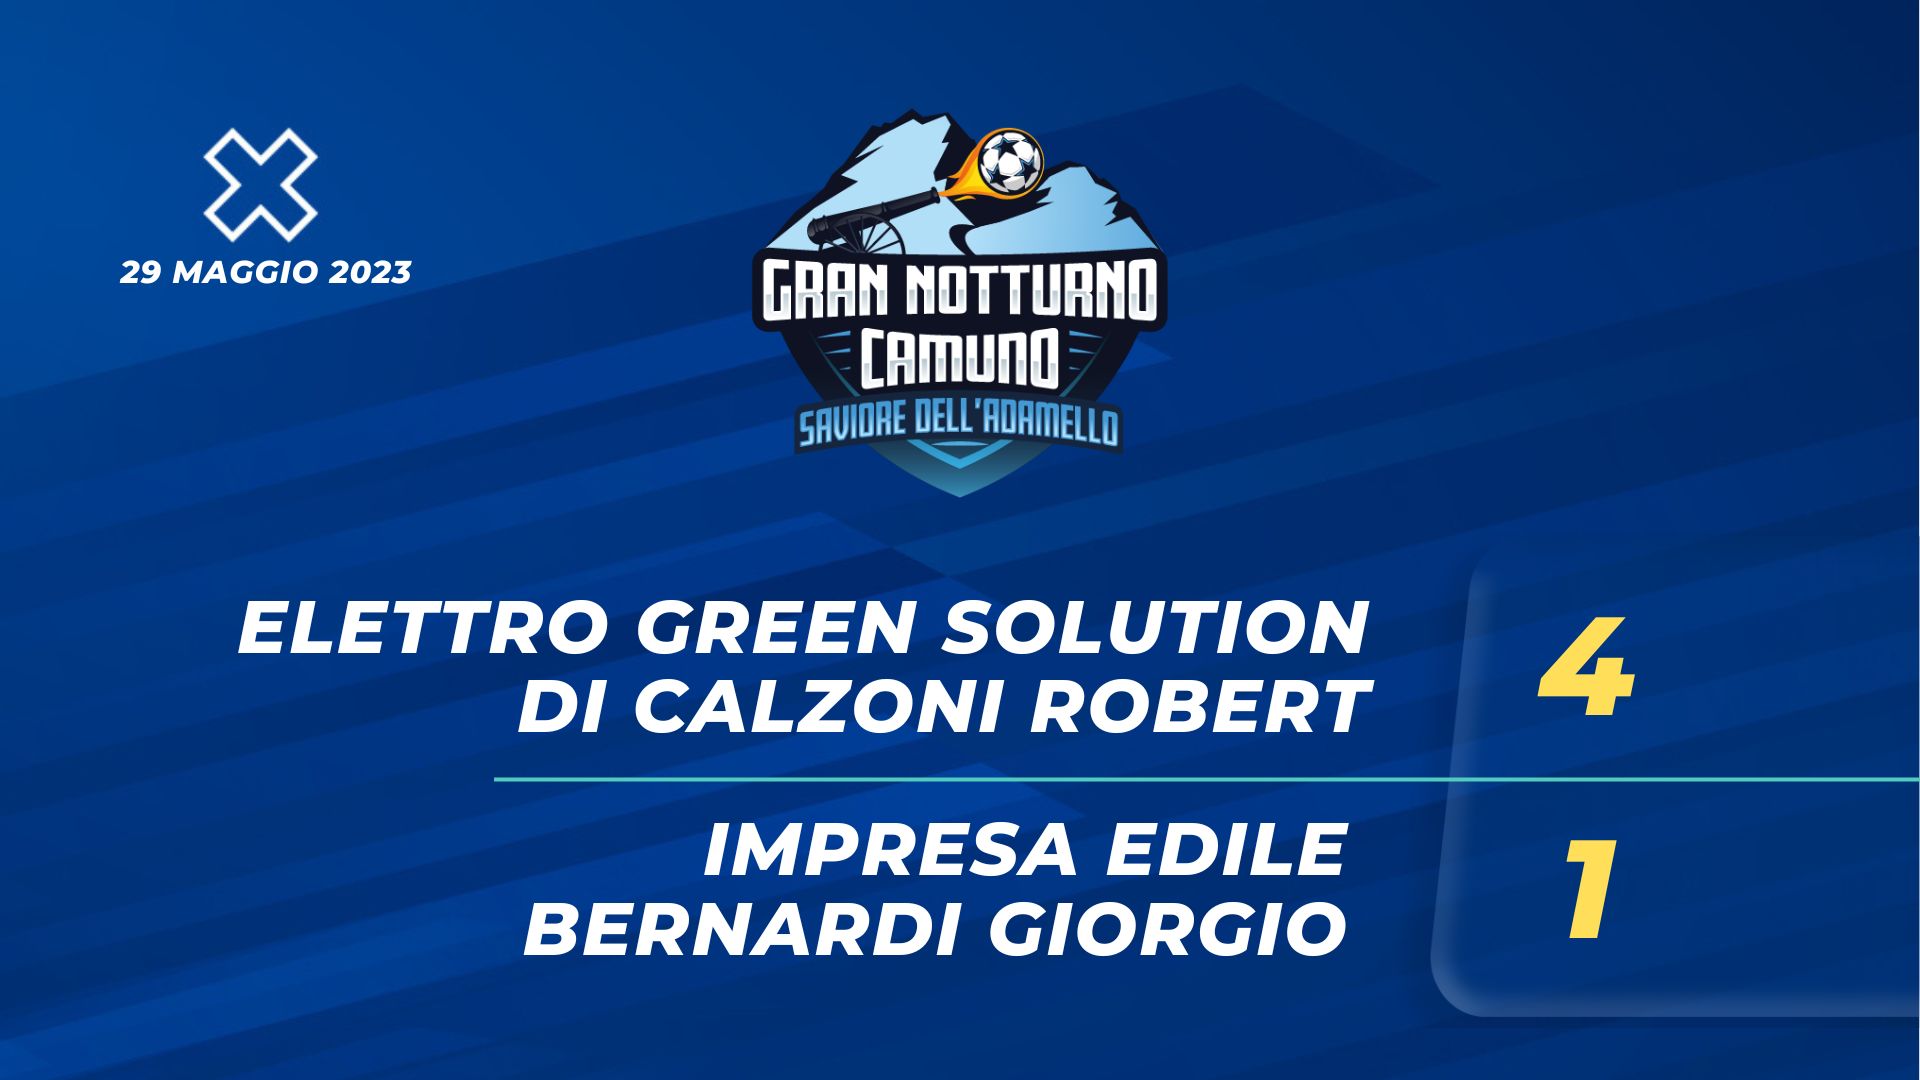 ELETTRO GREEN SOLUTION - IMPRESA EDILE BERNARDI GIORGIO 4 - 1